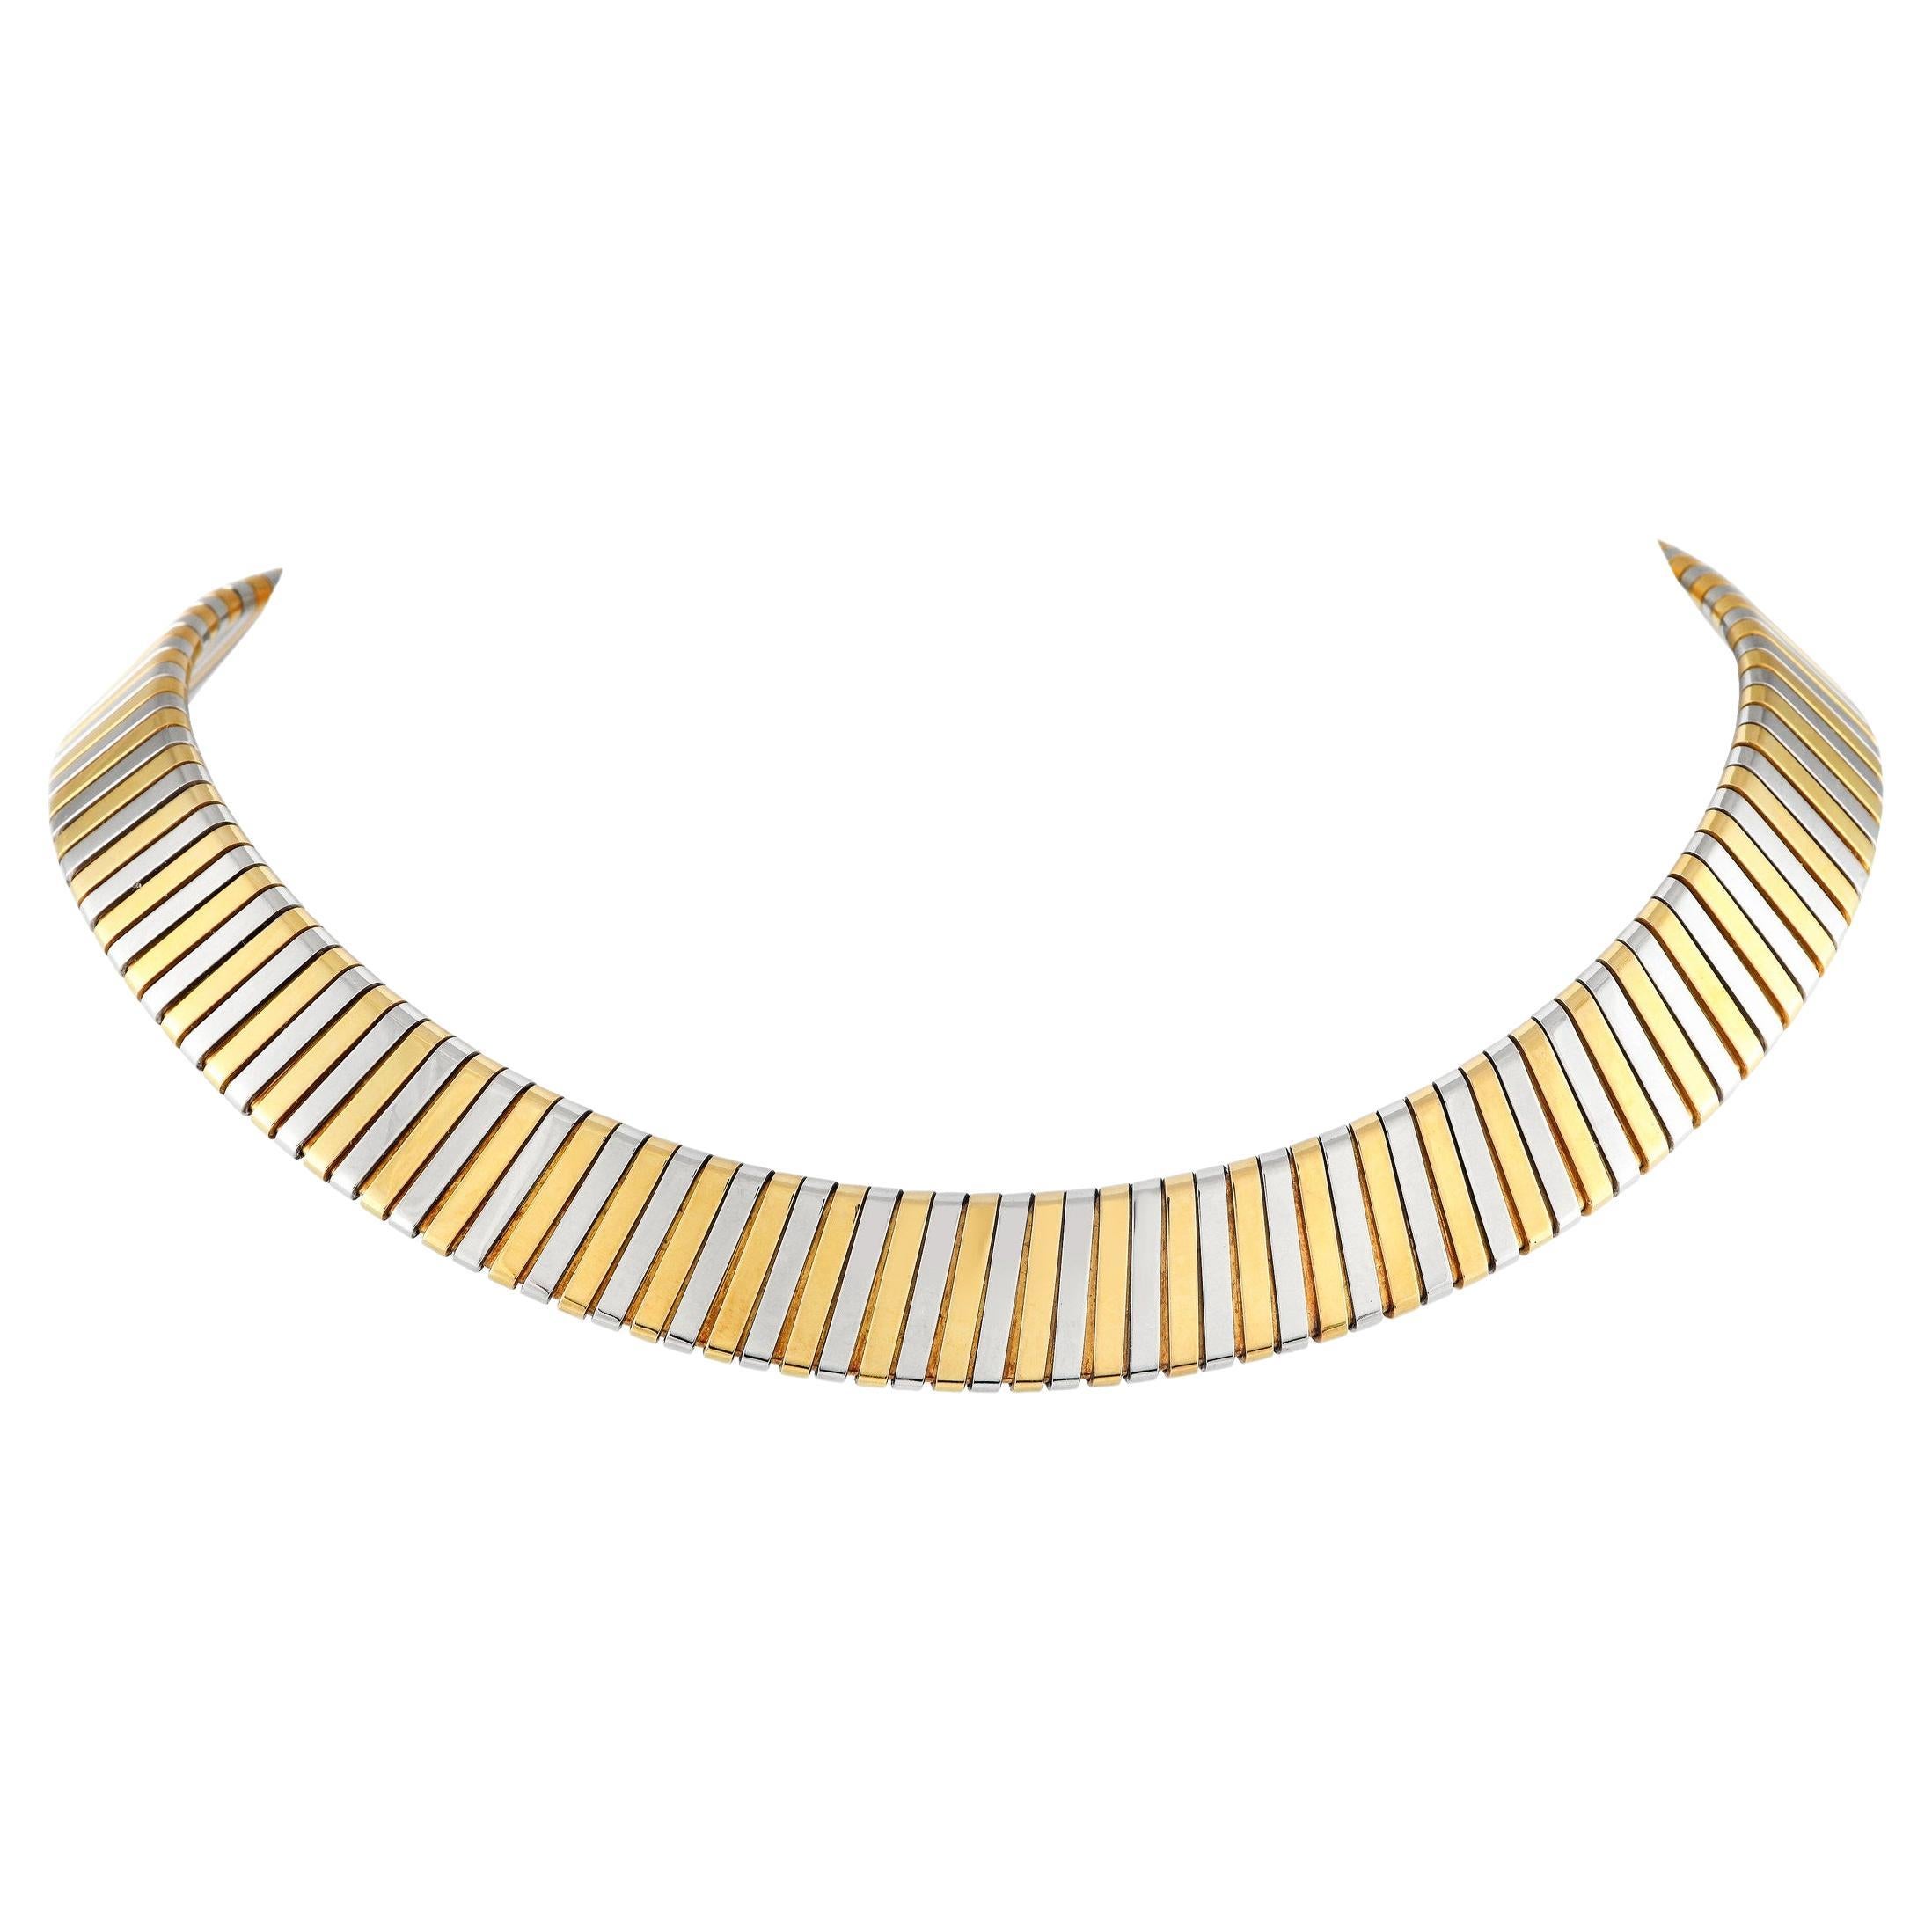 Bvlgari Tubogas 18K Yellow and White Gold Choker Necklace